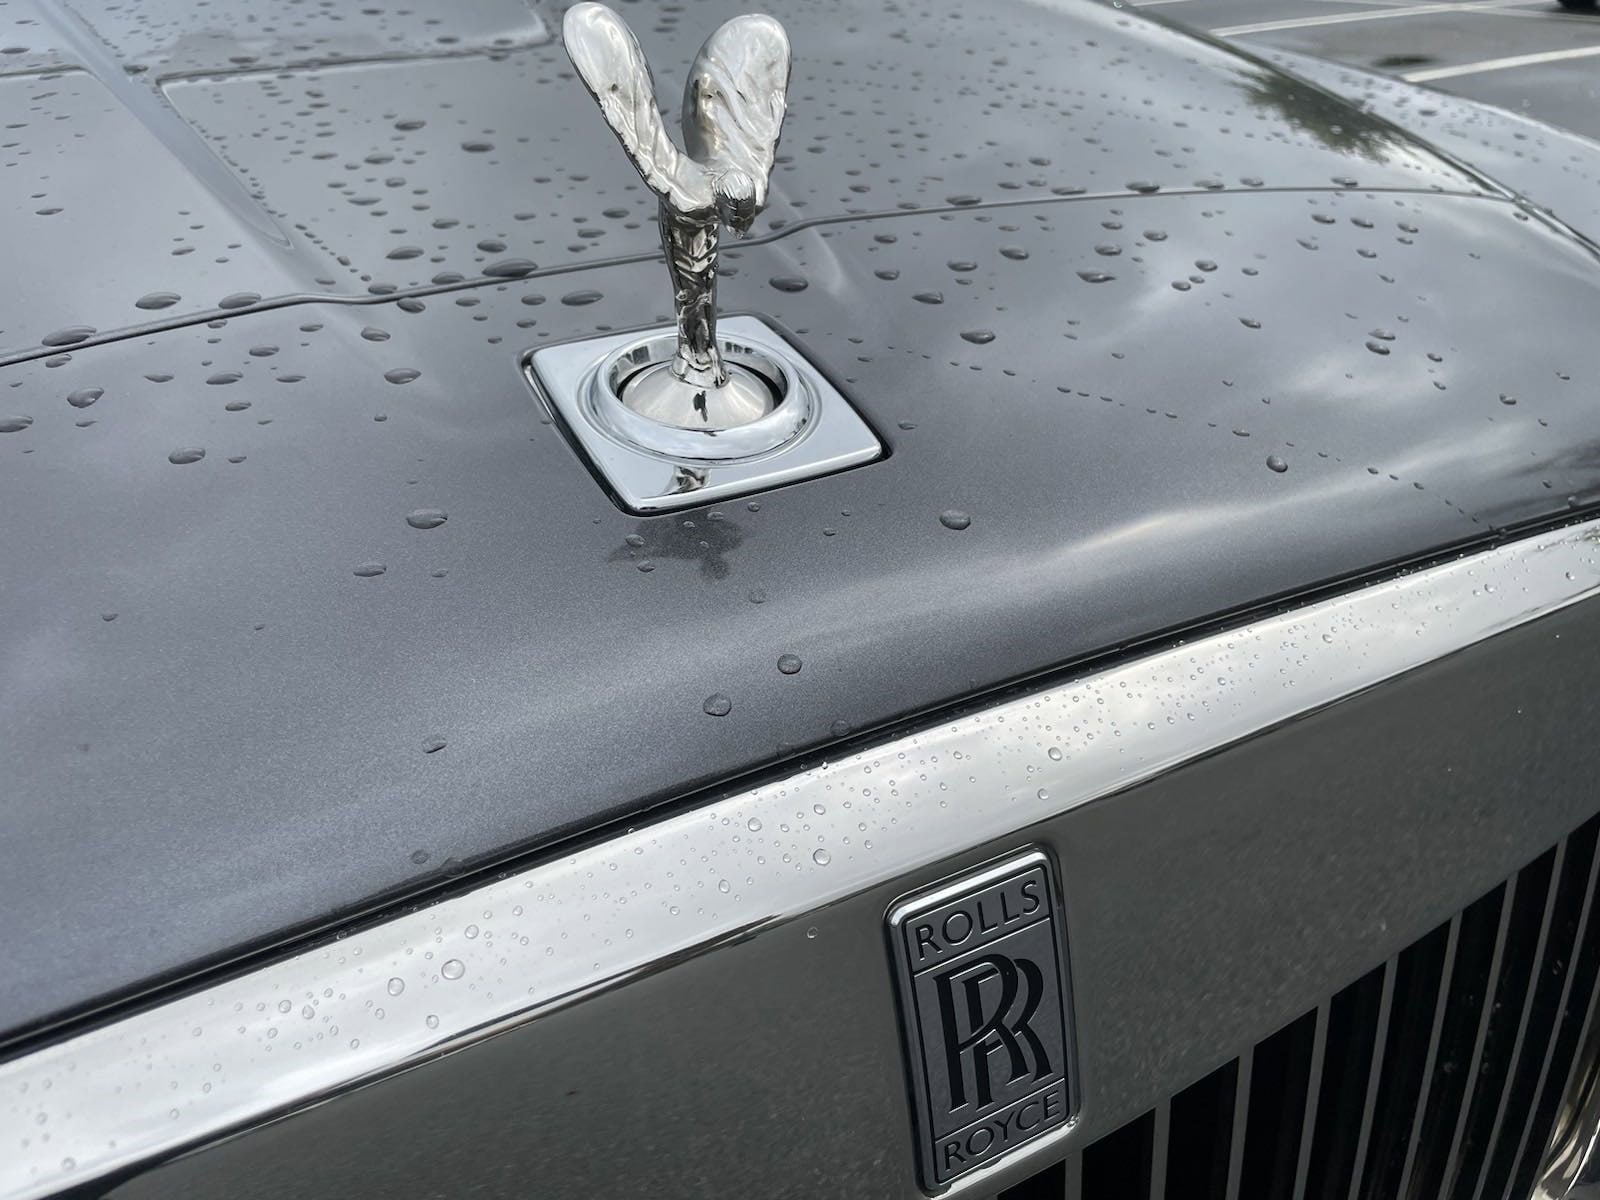 Used 2020 Rolls-Royce Cullinan For Sale at Rolls-Royce Motor Cars Paramus